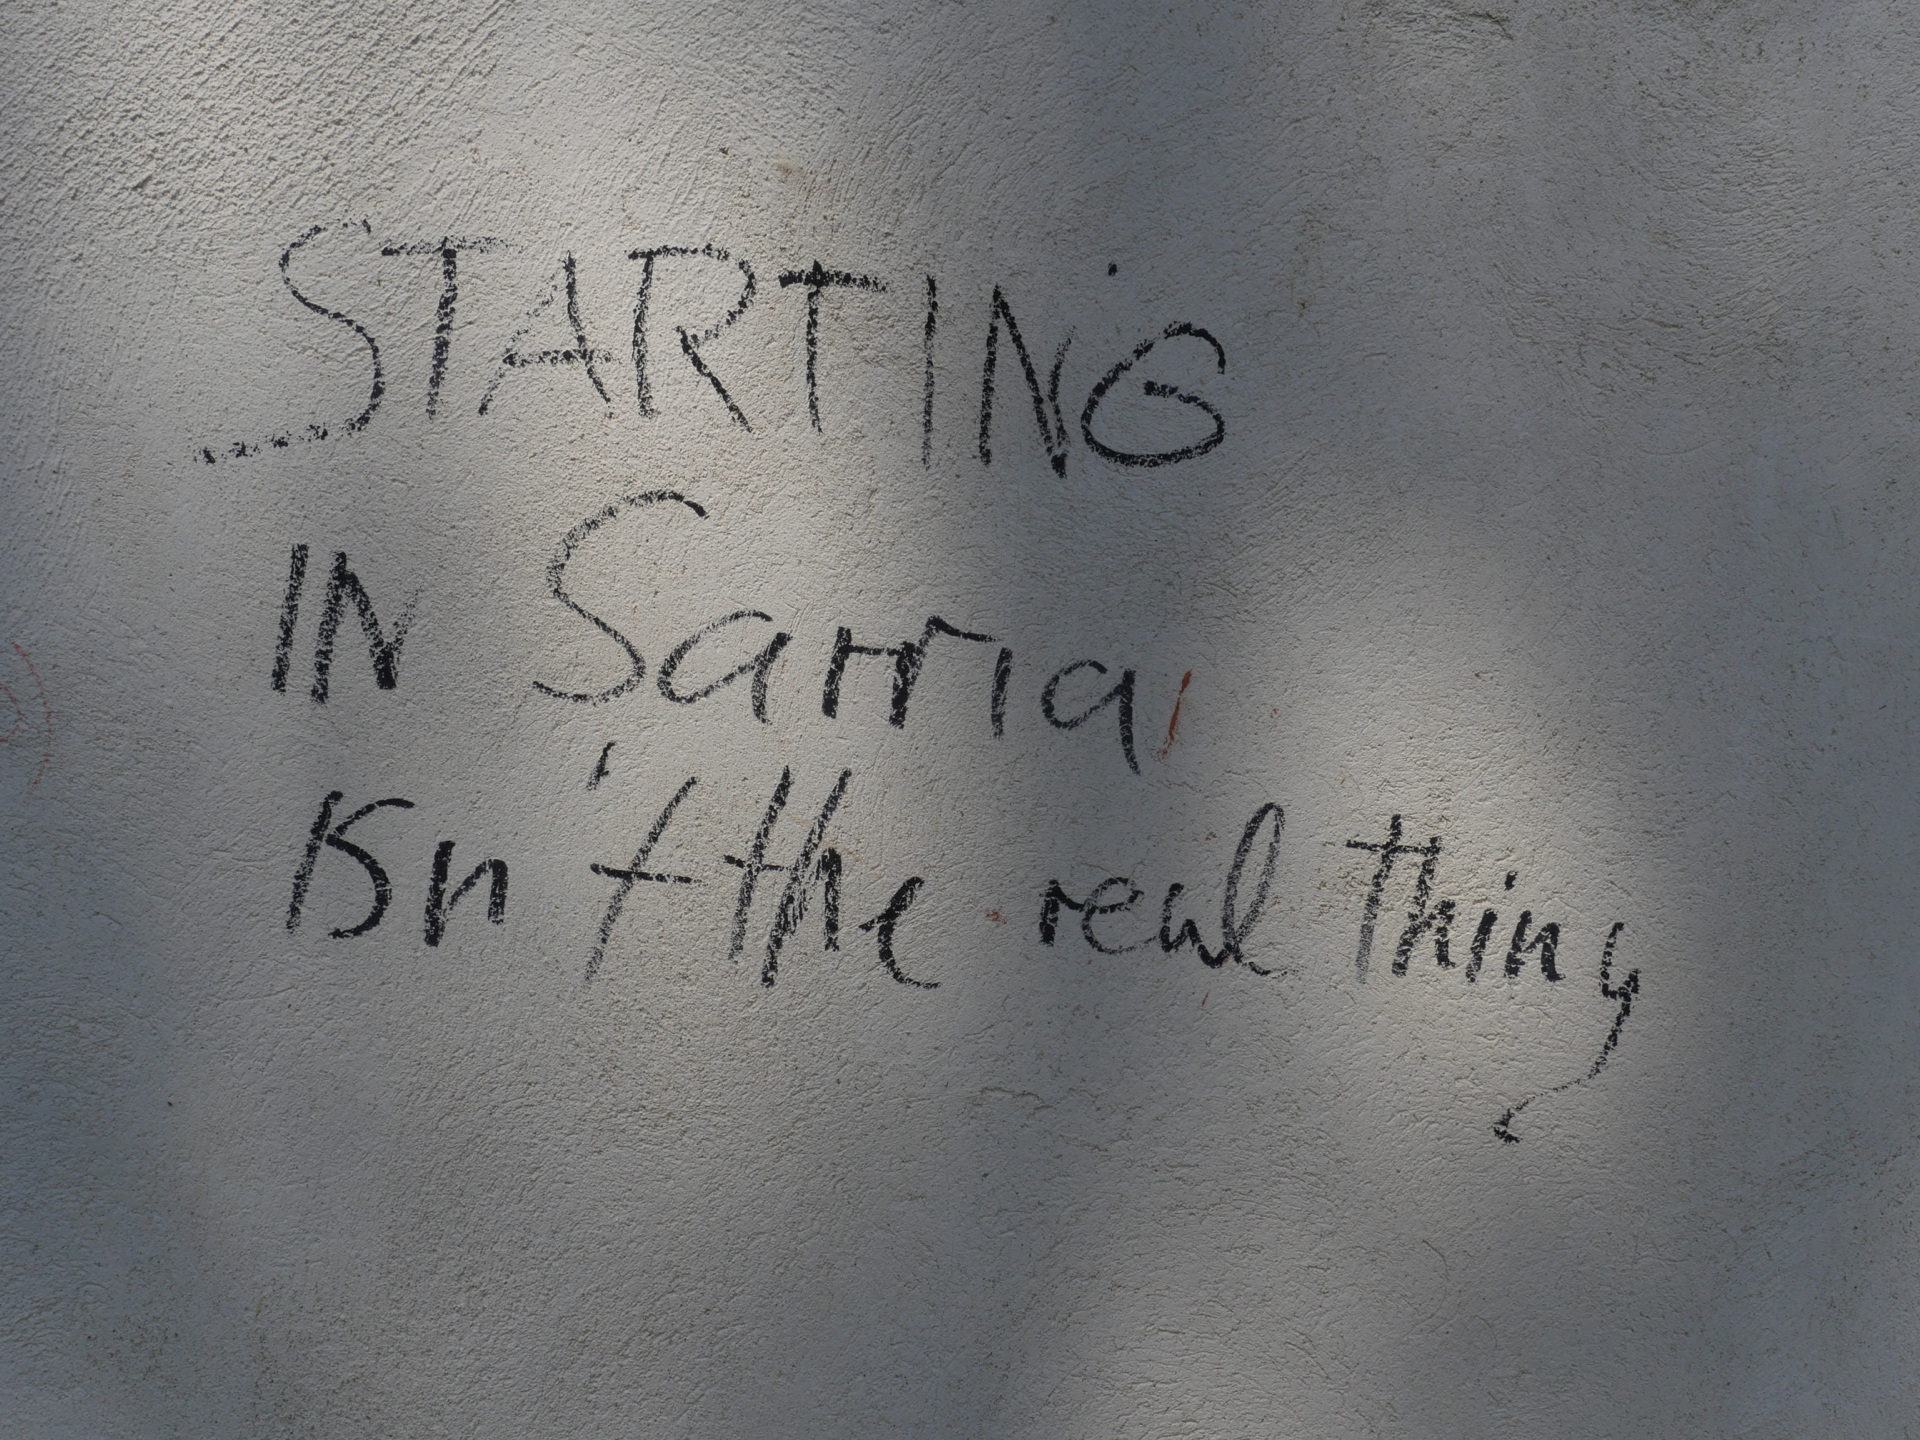 A handwritten sign near Sarria states, 